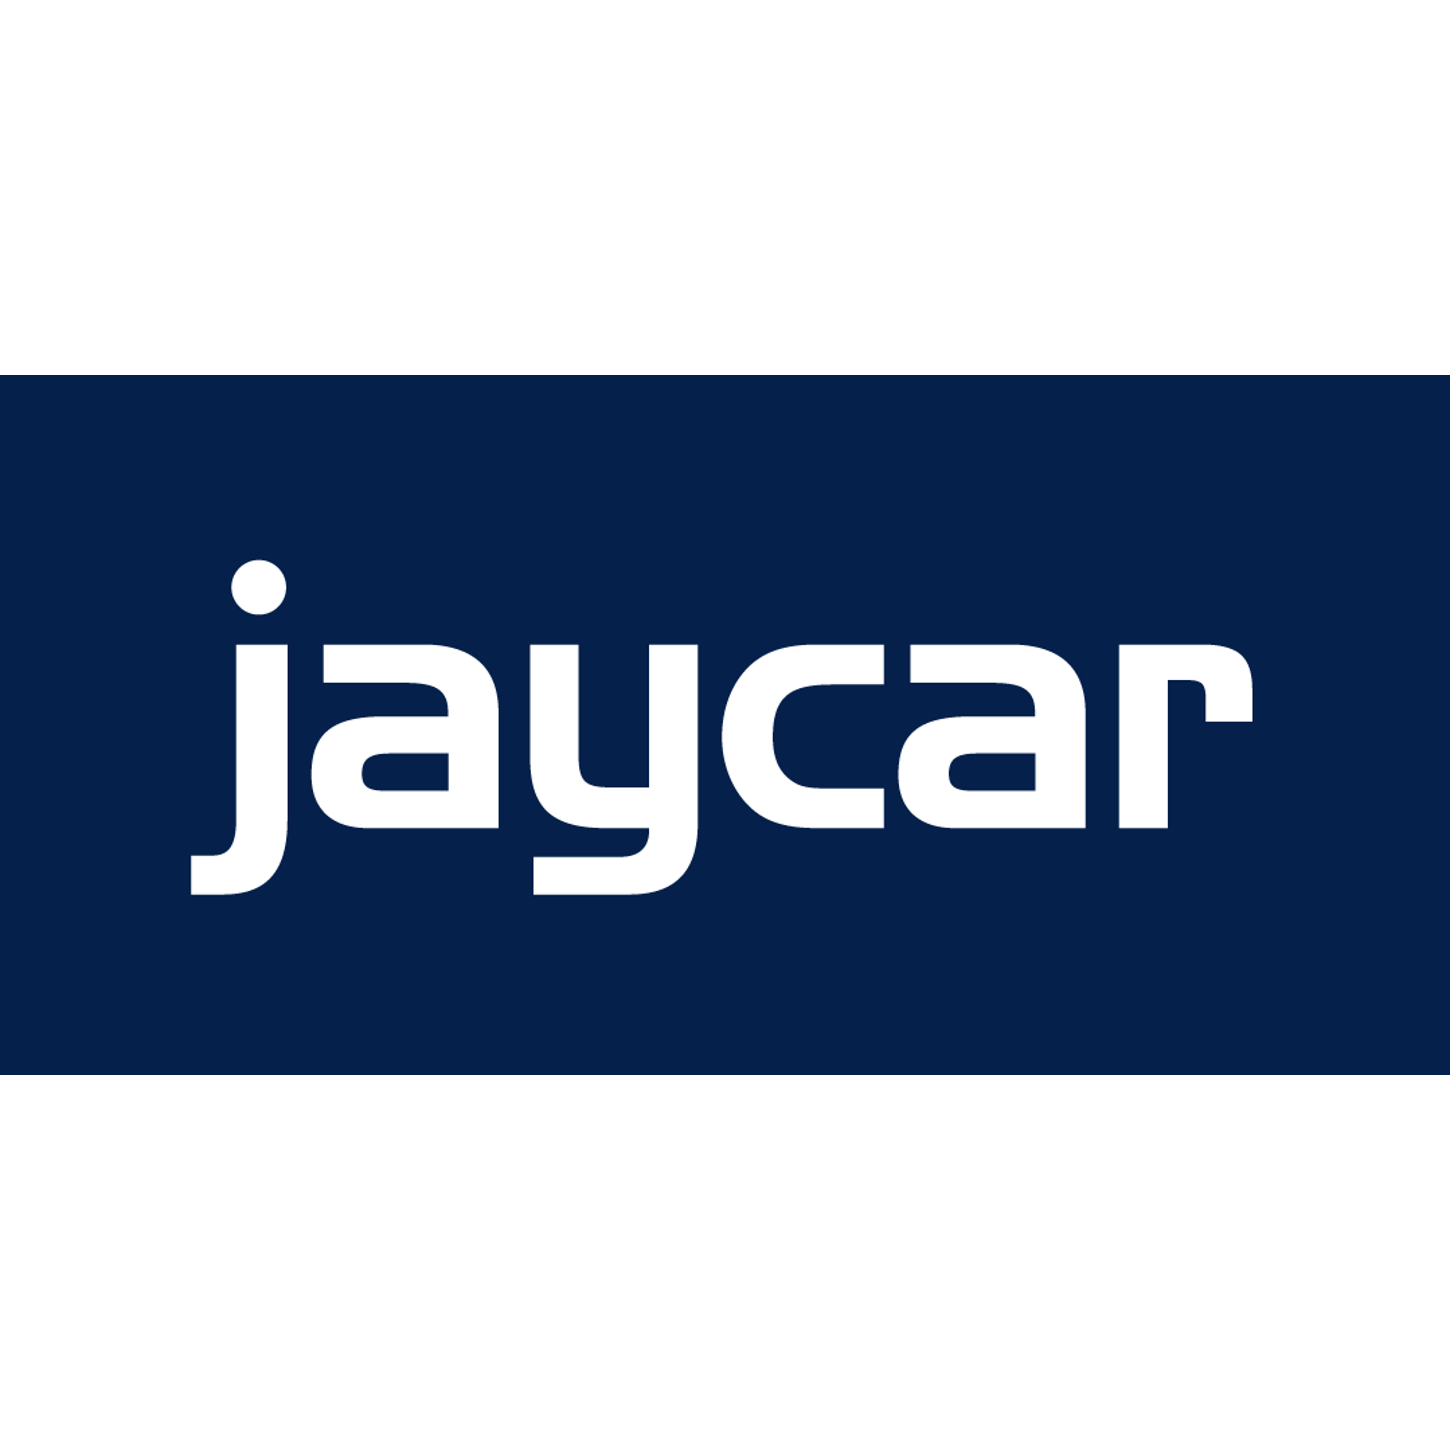 Jaycar Electronics Busselton - Busselton, WA 6280 - (08) 6731 9958 | ShowMeLocal.com